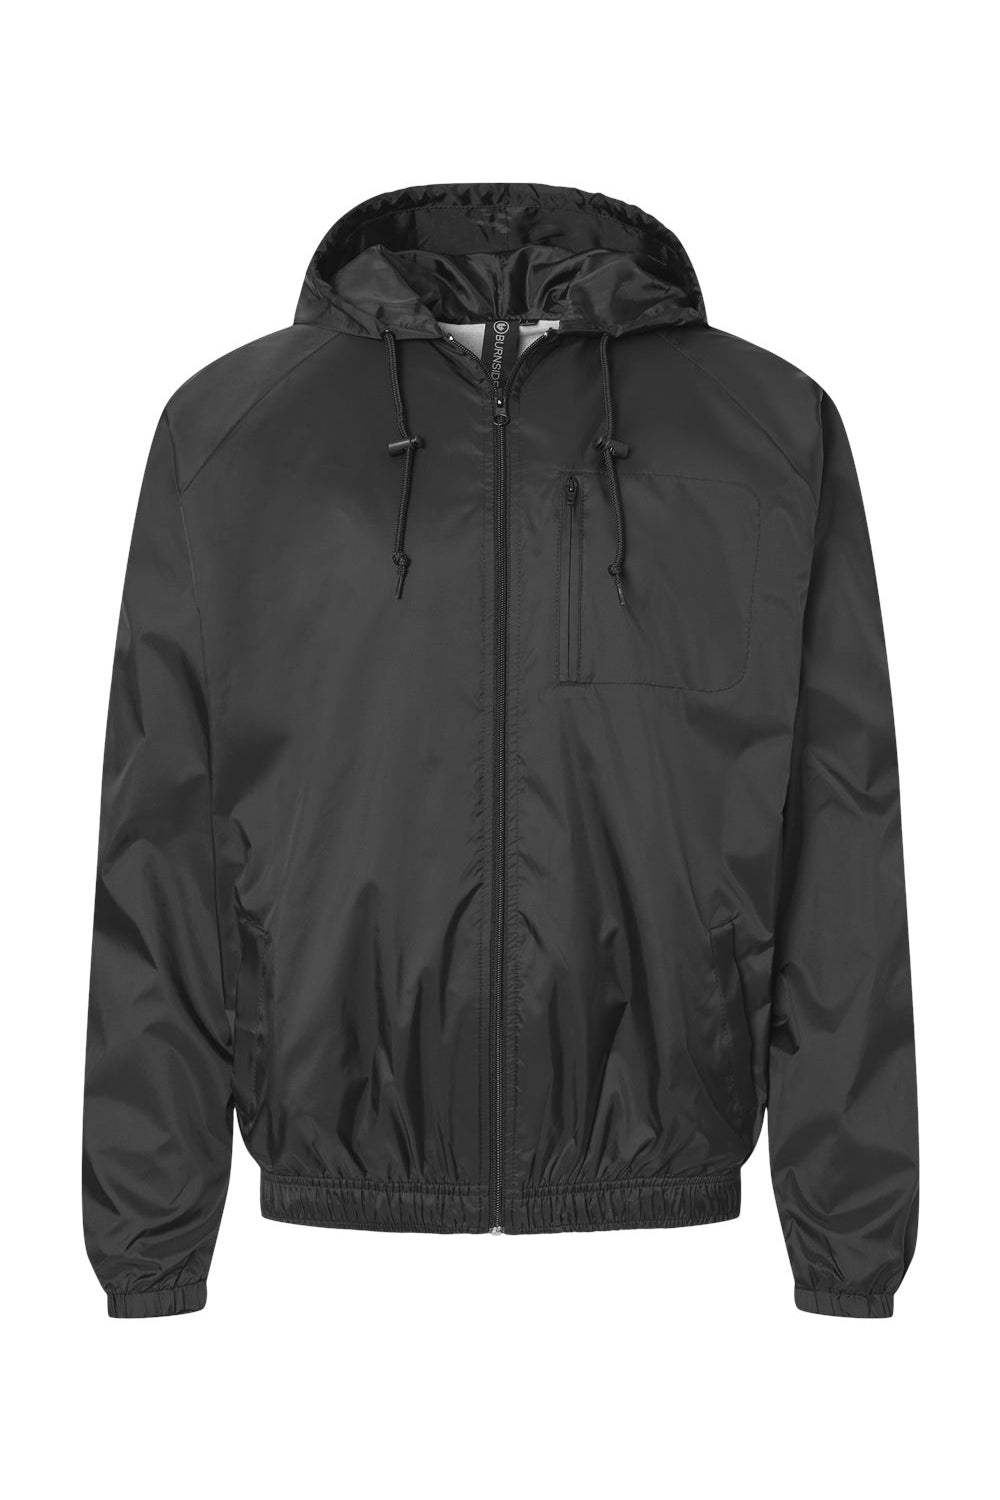 Burnside 9728 Mens Mentor Full Zip Hooded Coaches Jacket Steel Grey Flat Front